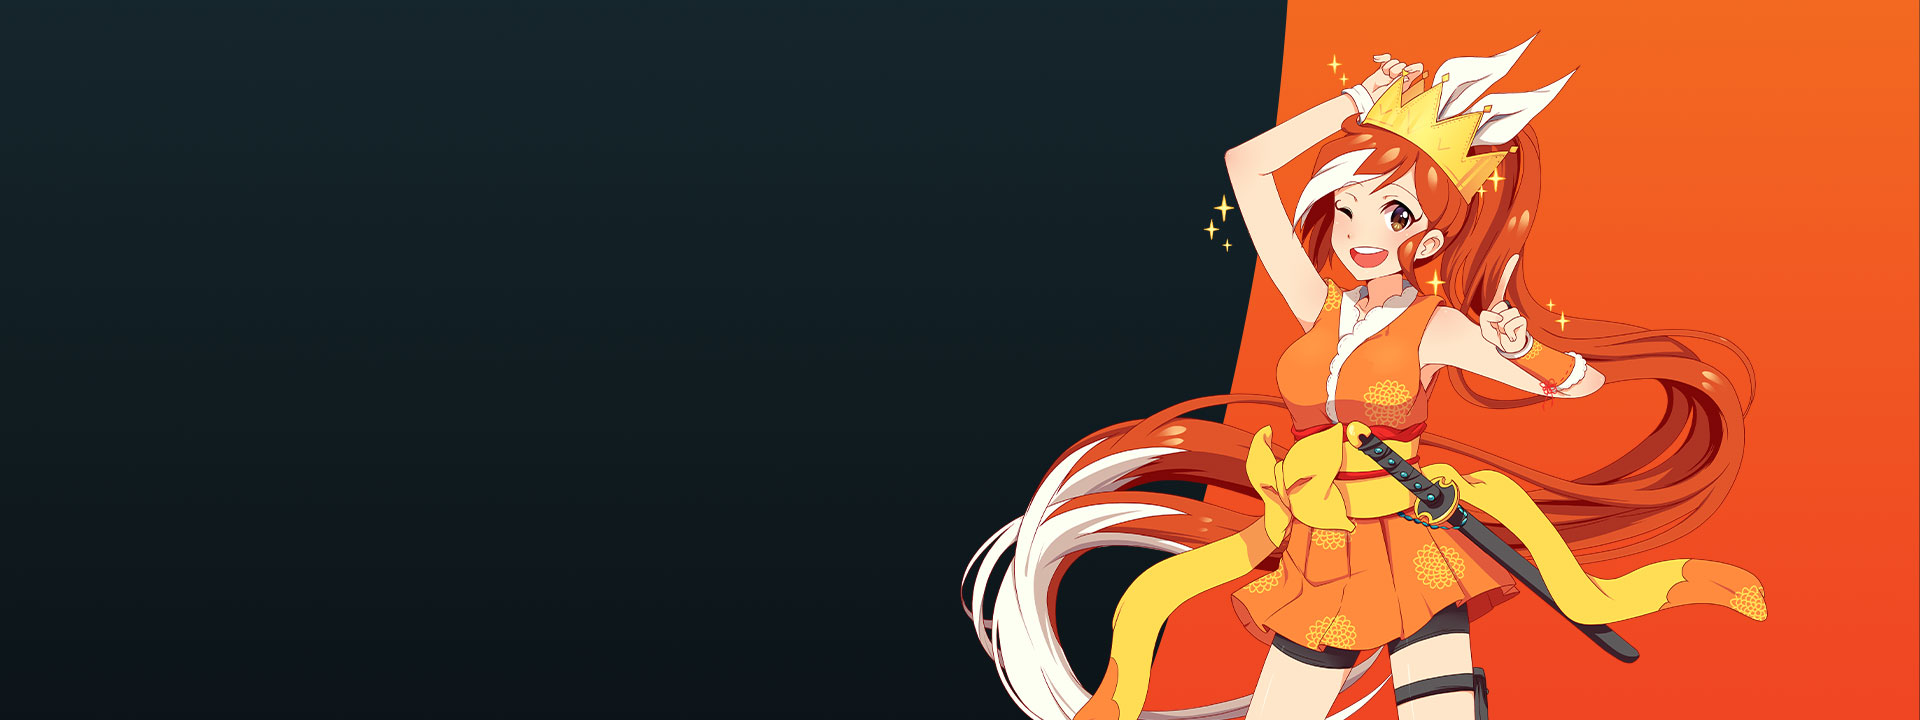 Crunchyroll Premium, Female anime character with long orange hair.